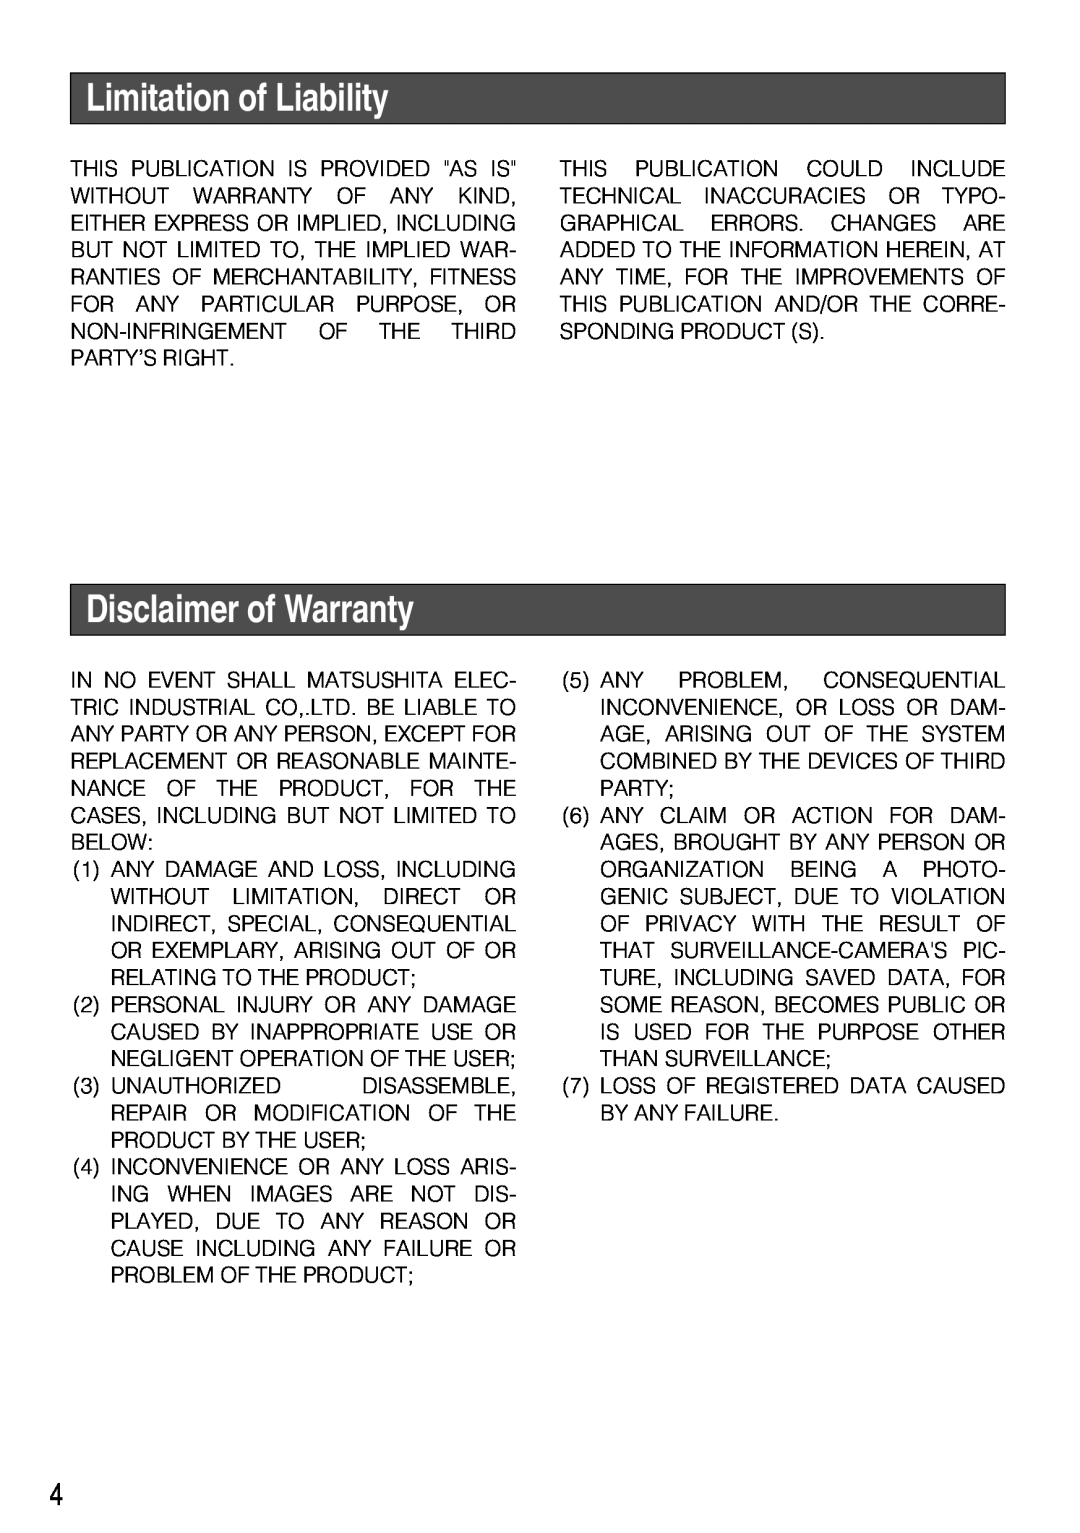 Panasonic WV-NP304 manual Limitation of Liability, Disclaimer of Warranty 